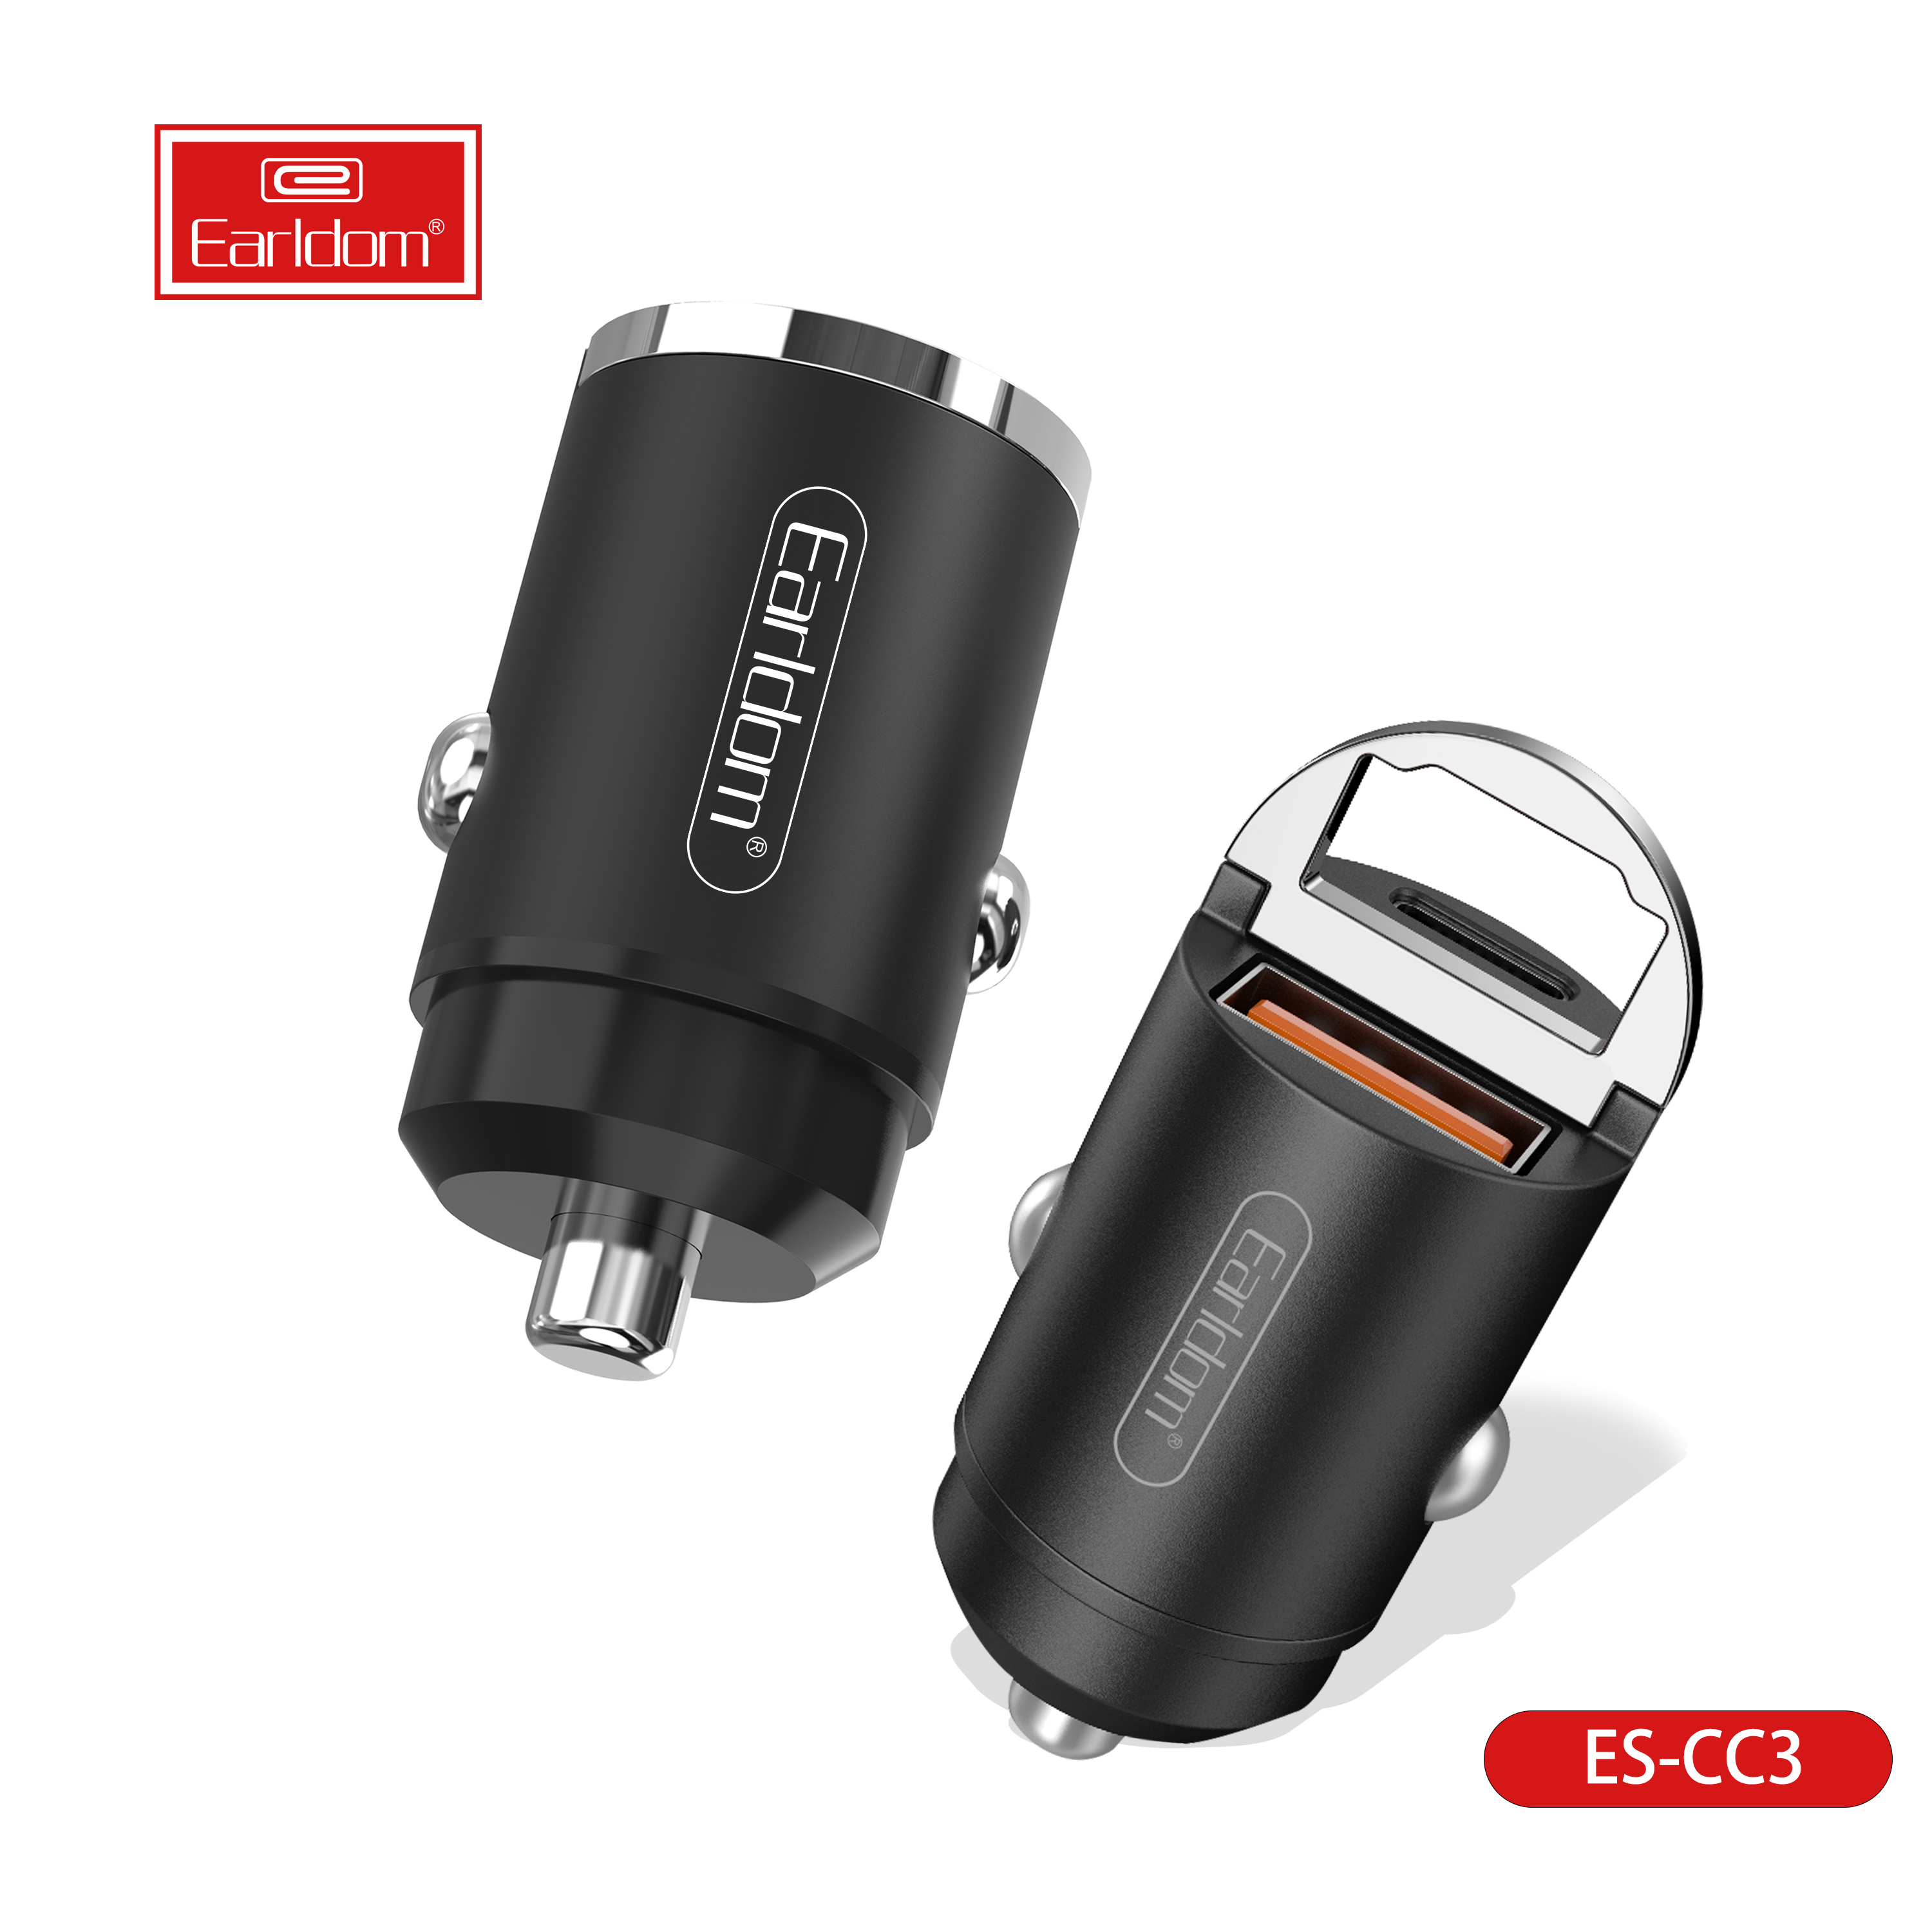 Earldom USB C Car Charger Super Mini  Fast USB Car Charger PD&QC 3.0 Dual Port Car Adapter Compatible with iPhone 12/12 Pro/Max/12 Mini/iPhone 11/Pro/Max/XR/XS/Max/8, Galaxy S21/20/10/9